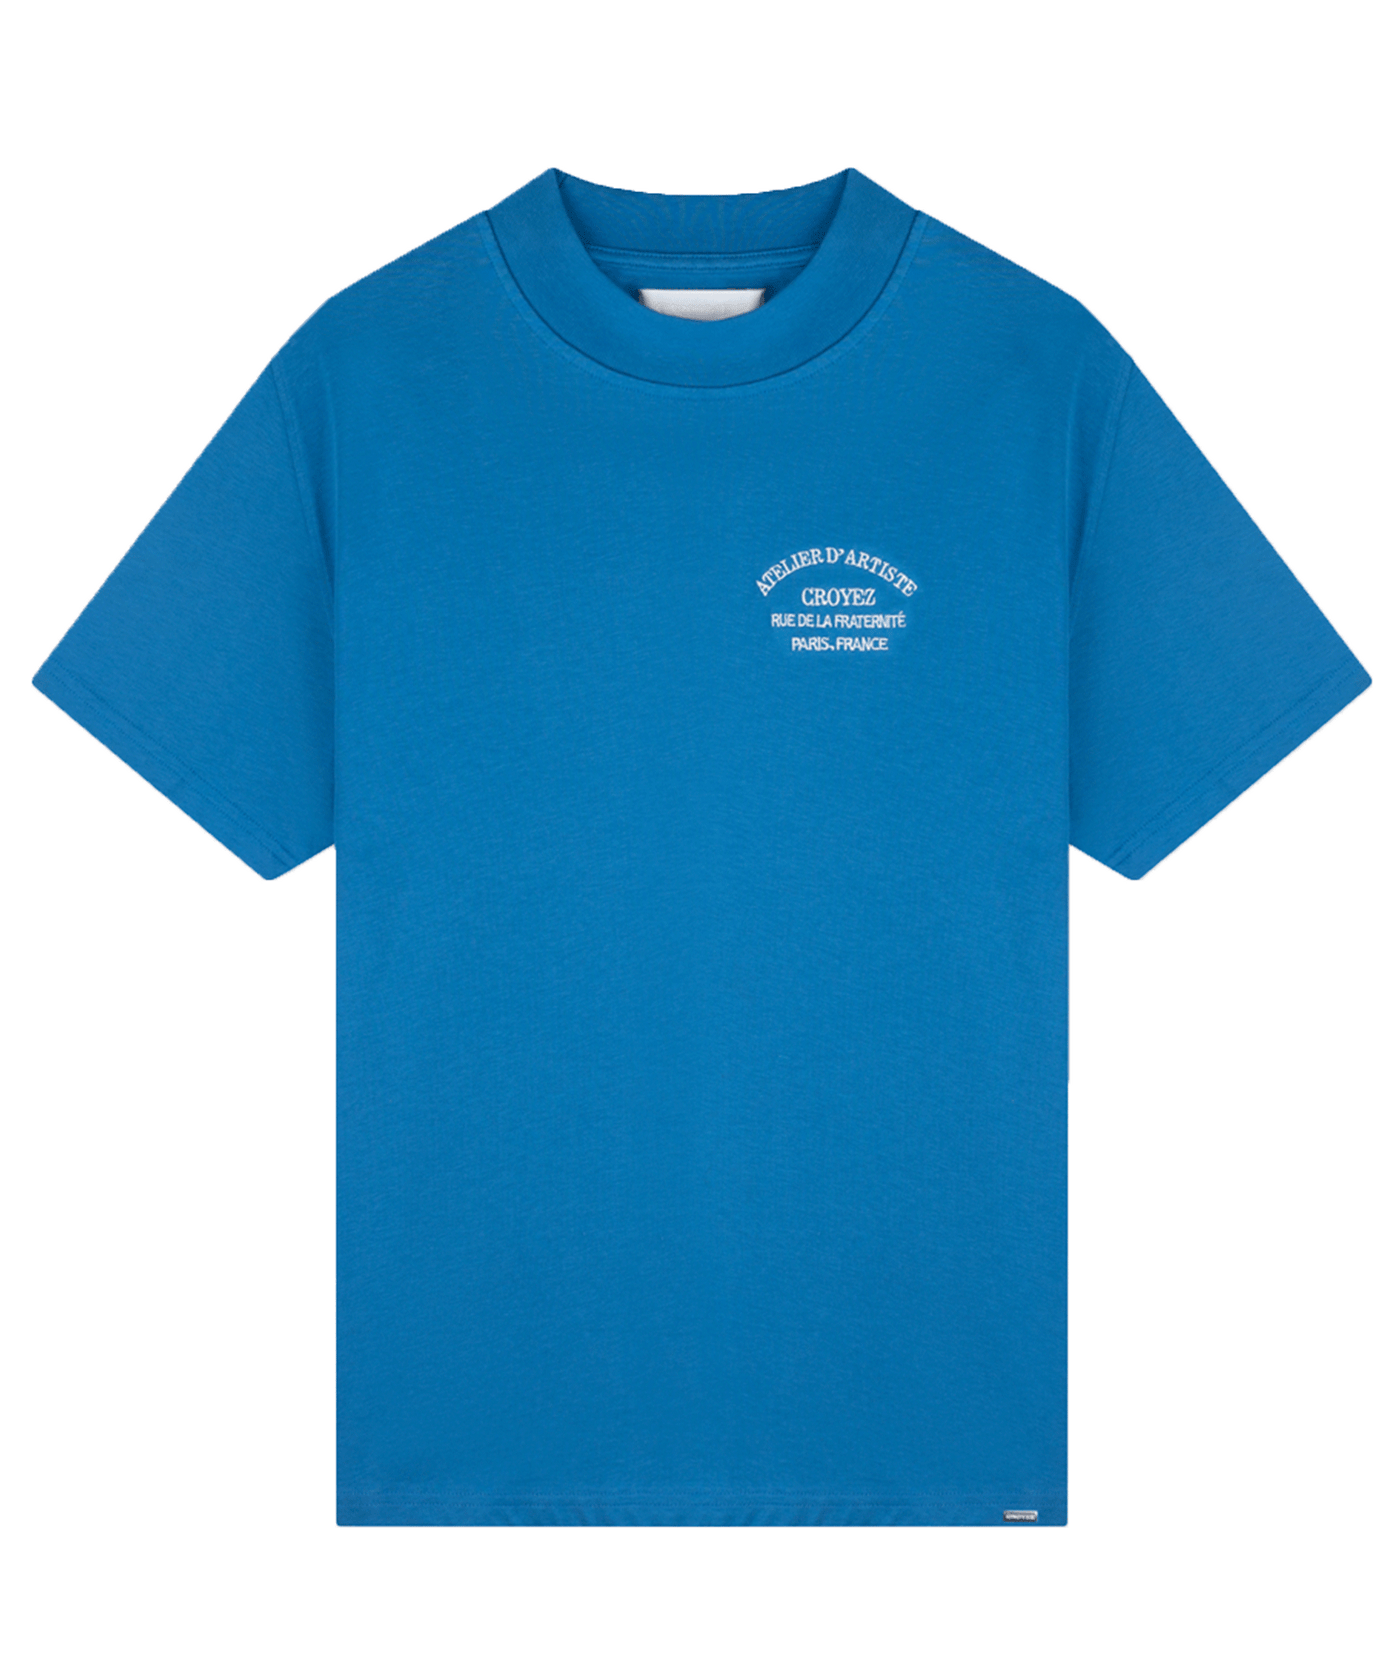 CROYEZ - Atelier - T-shirt - Royal Blue